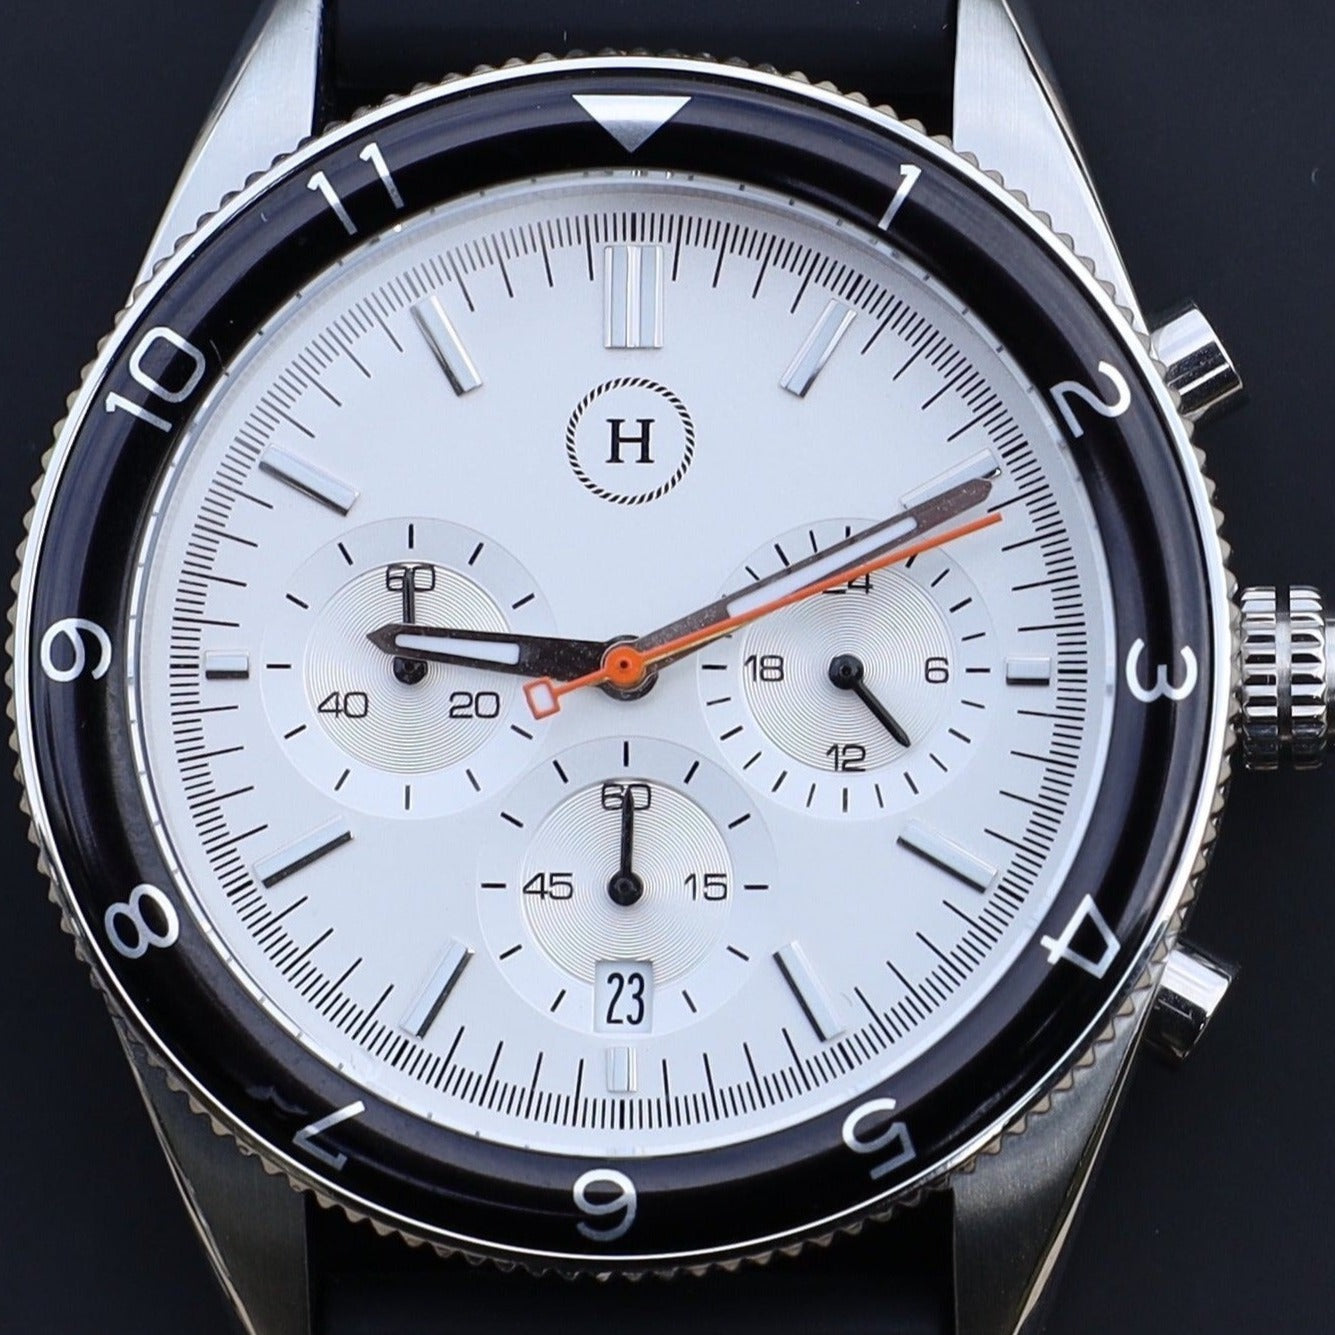 The Starlite - Handley Watches